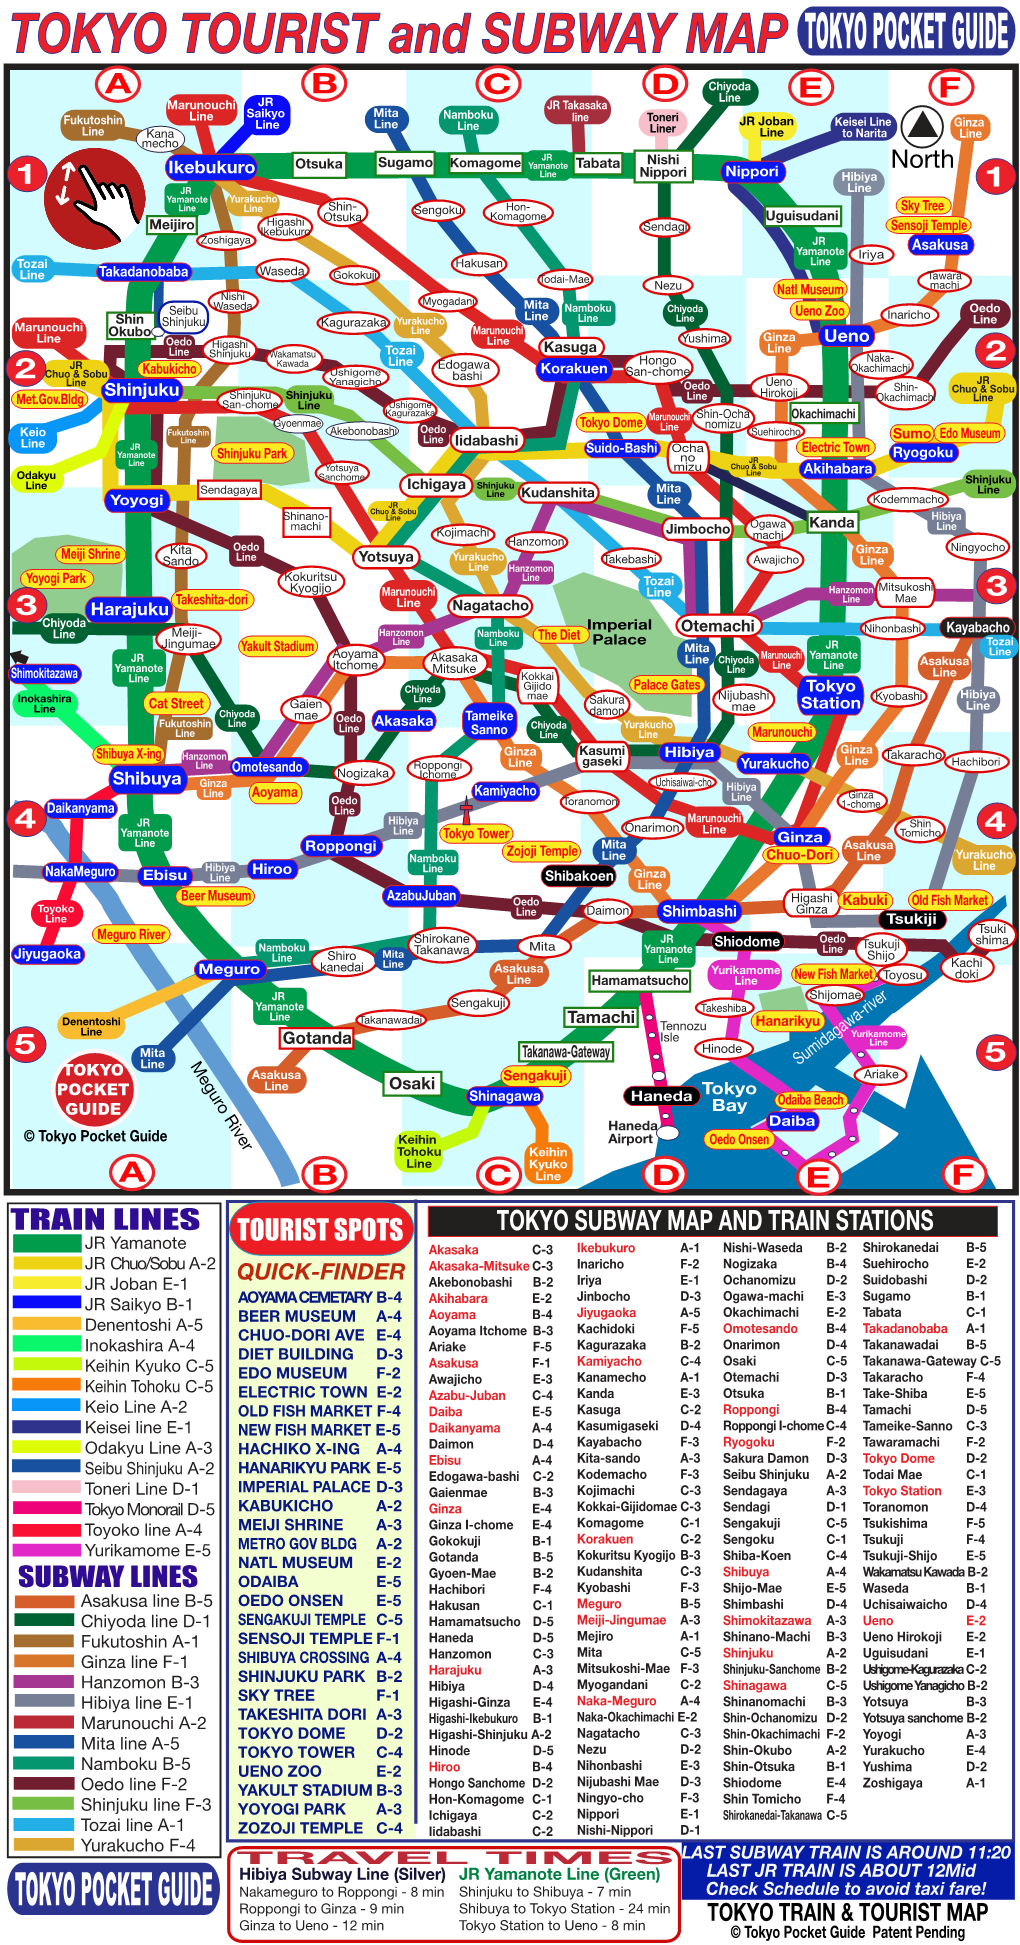 TOKYO TOURIST and SUBWAY MAP TOKYO POCKET GUIDE